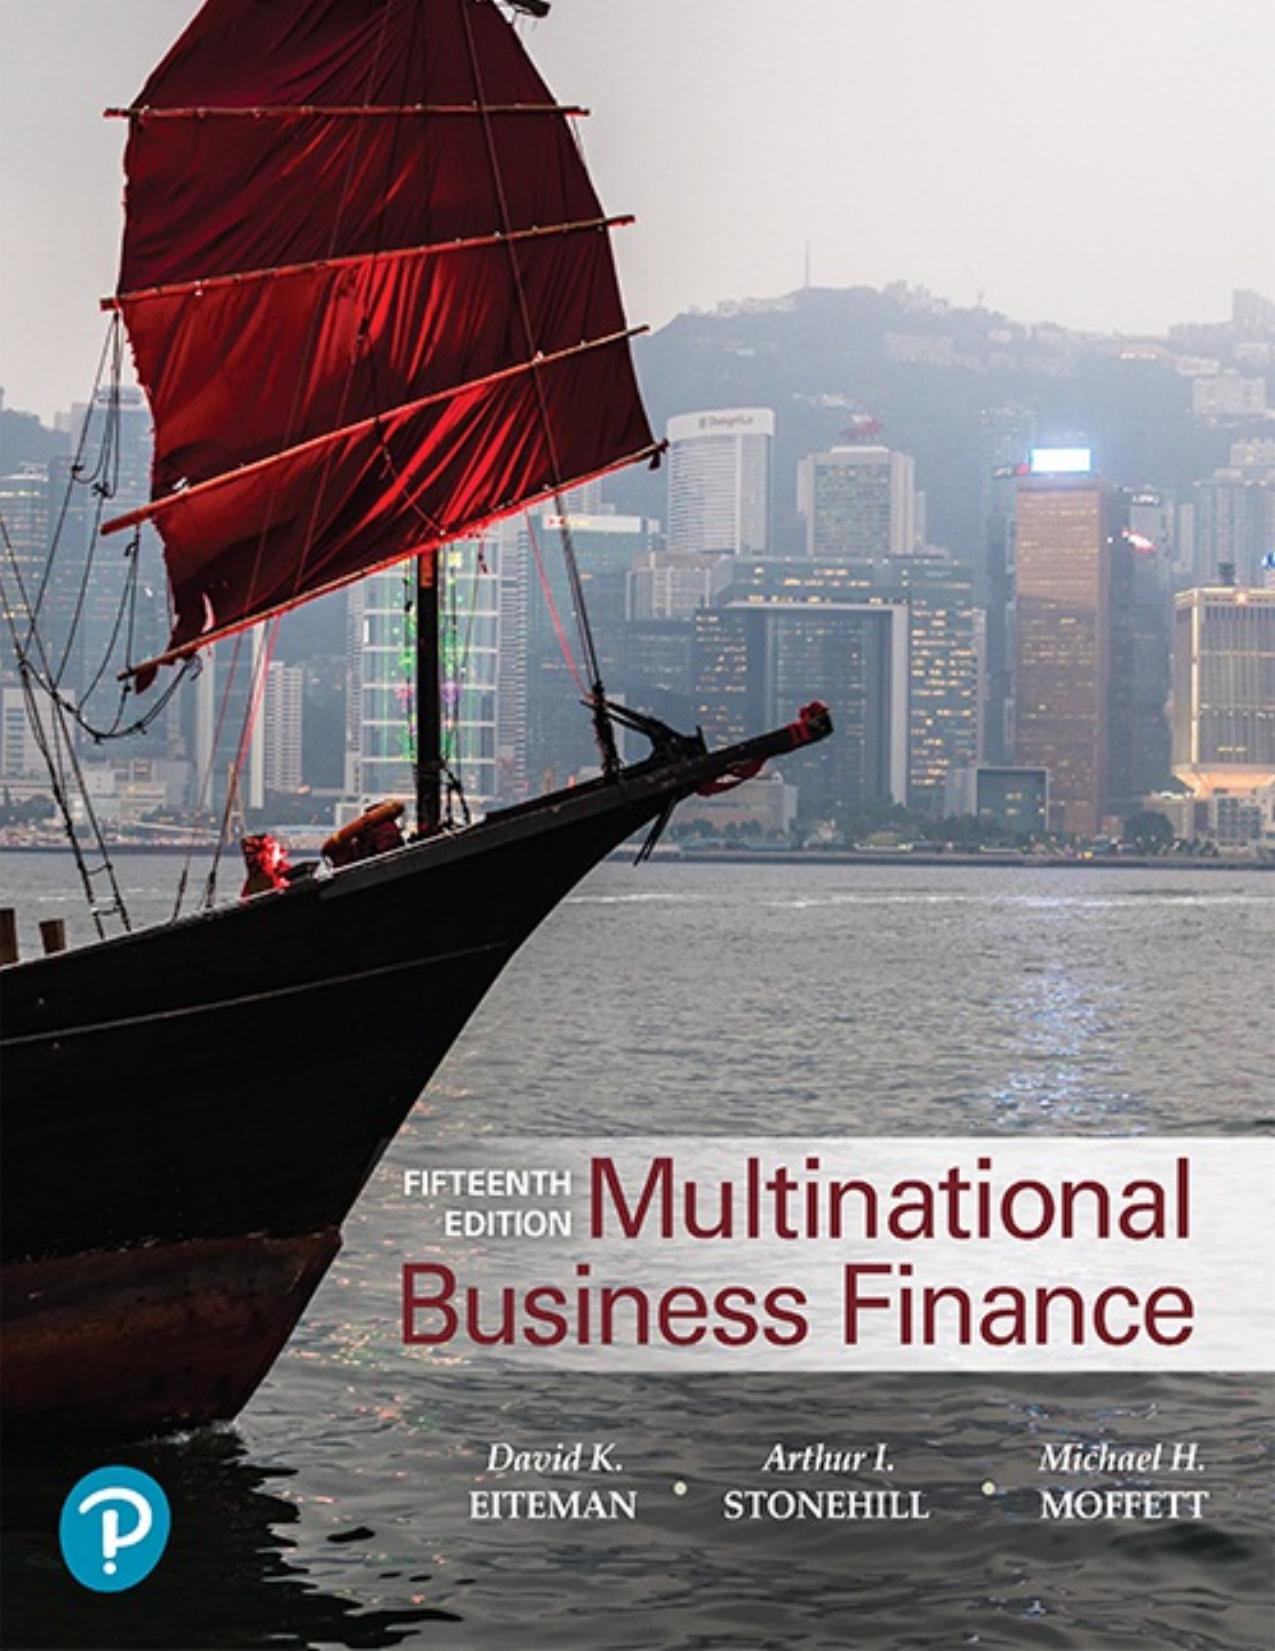 Multinational Business Finance 15th Edition by David K. Eiteman - Vitalsource Download.jpg